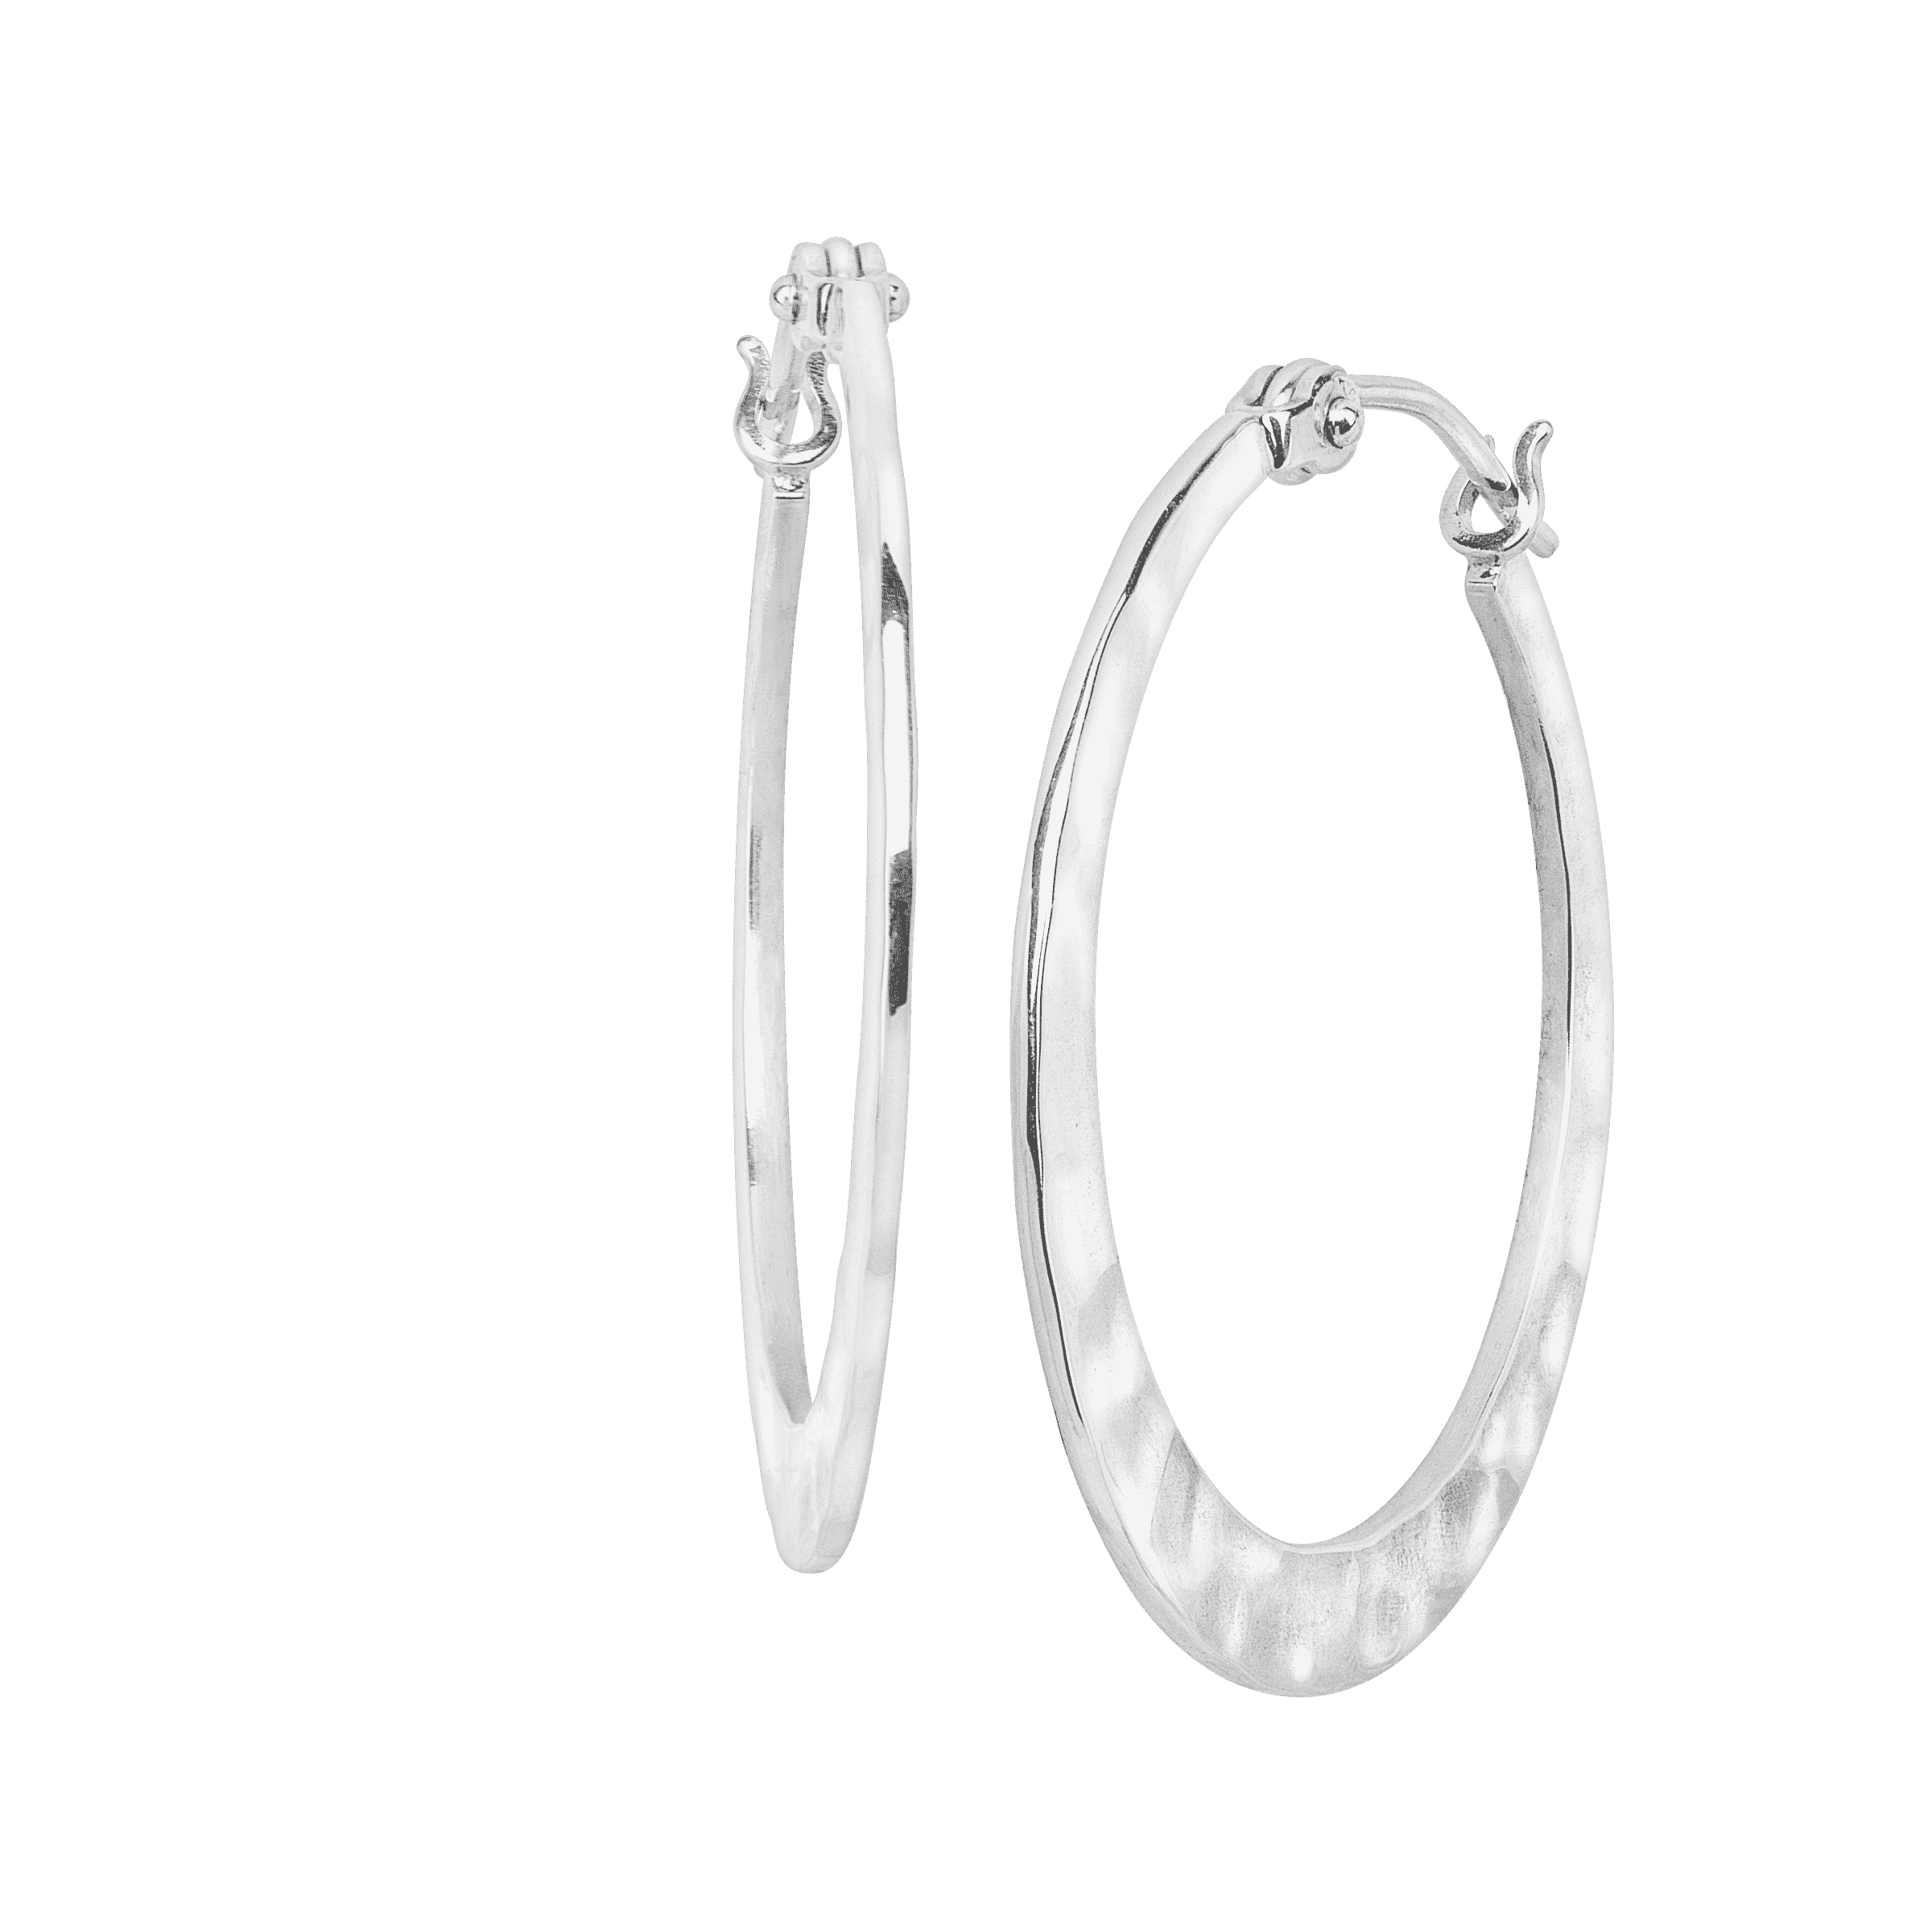 Share more than 78 sterling silver wire earrings best - esthdonghoadian